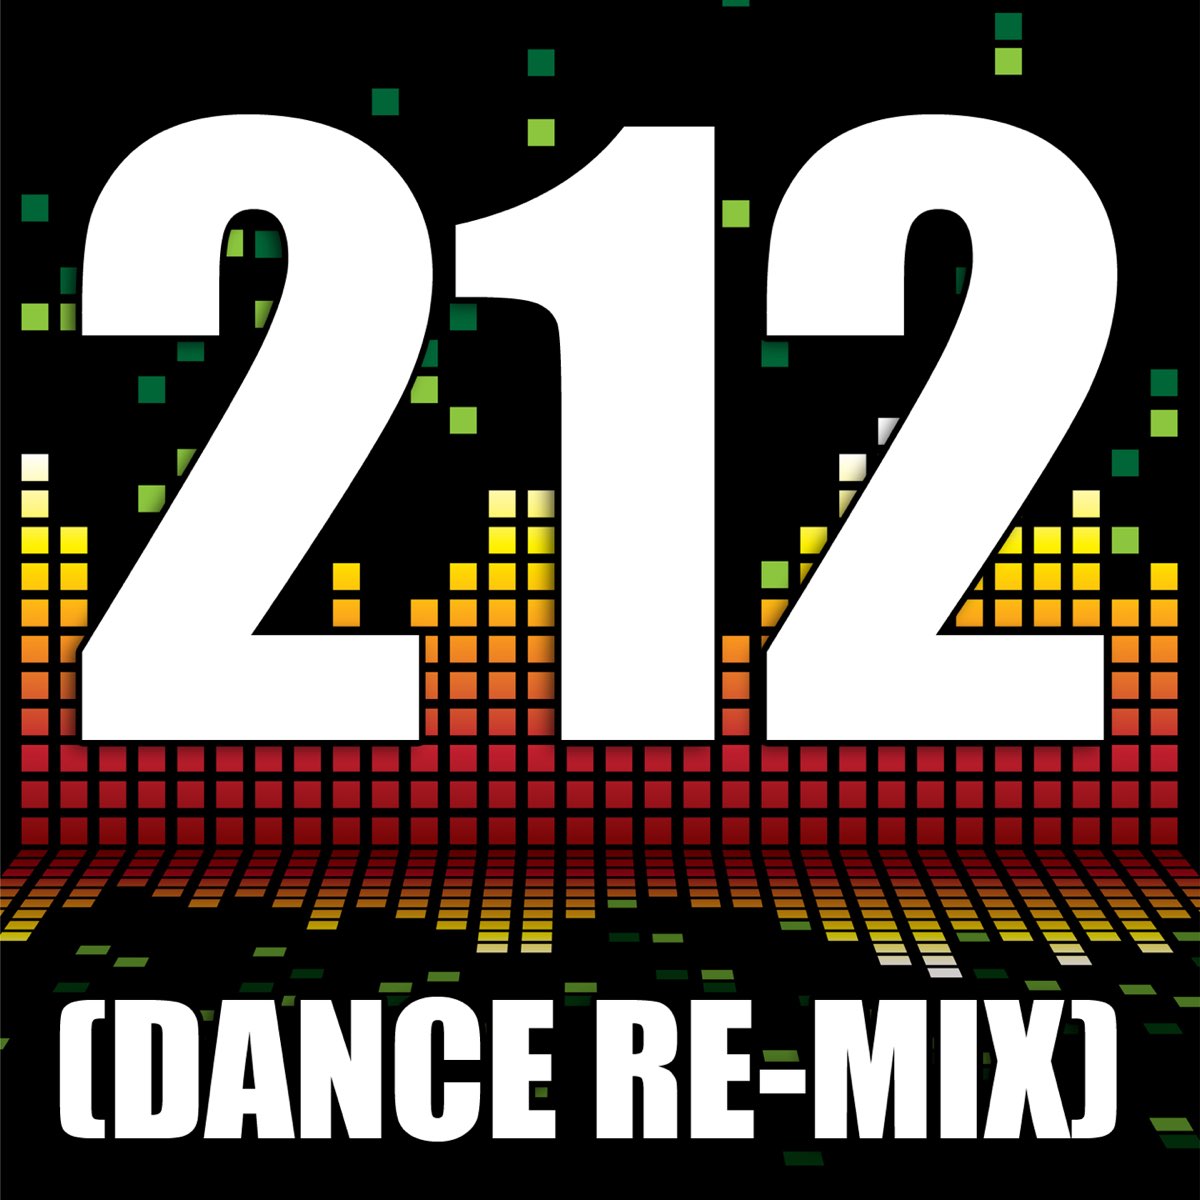 Dance remix mp3. 212 Heroes. Mix Hero. Music News Vol.212.